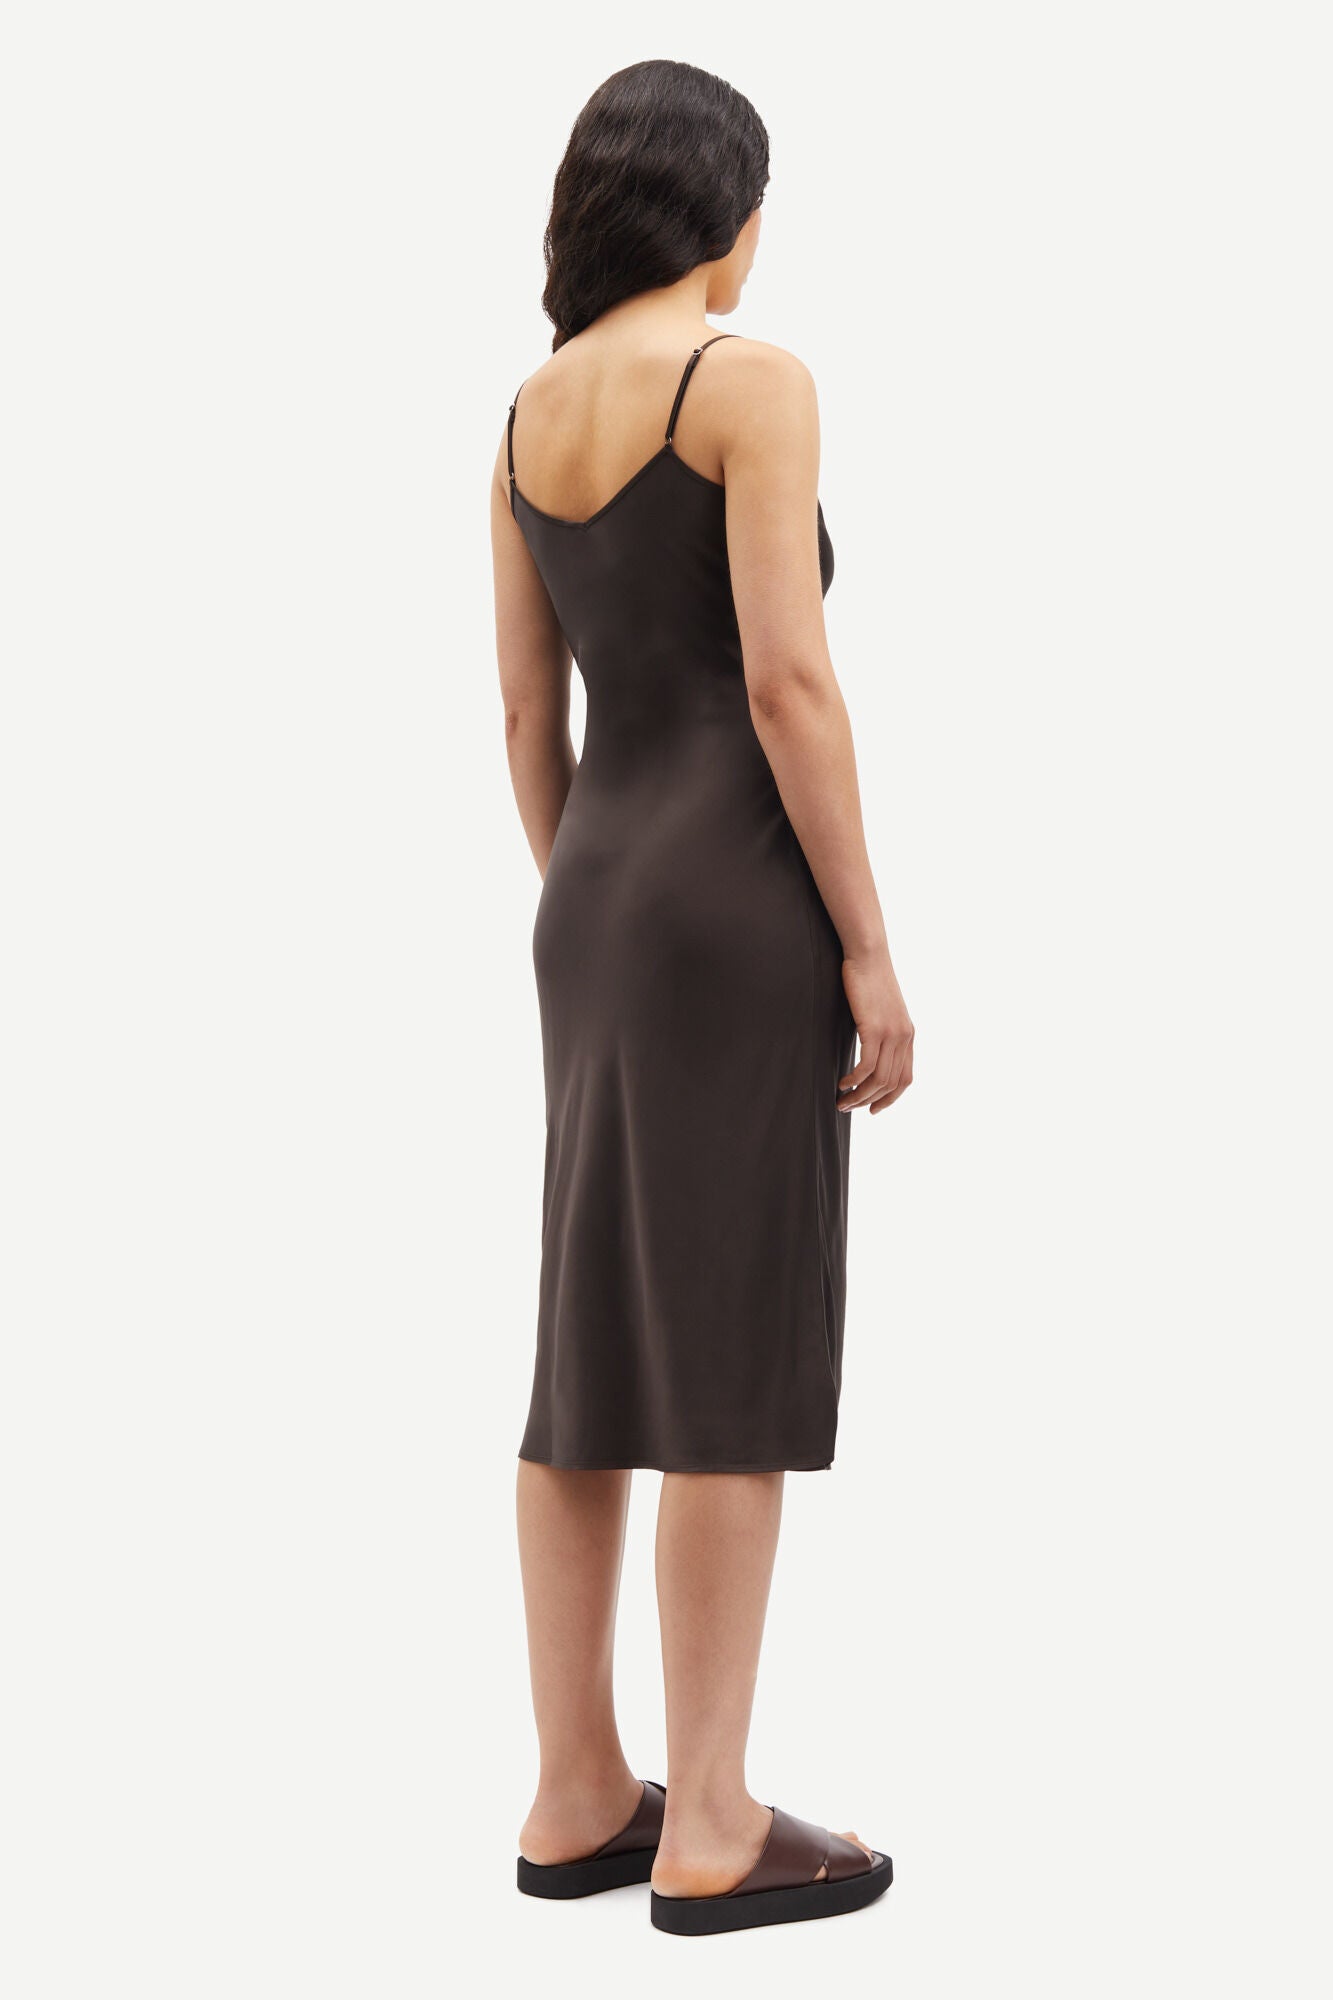 Dark brown satin slip dress with adjustable spaghetti straps